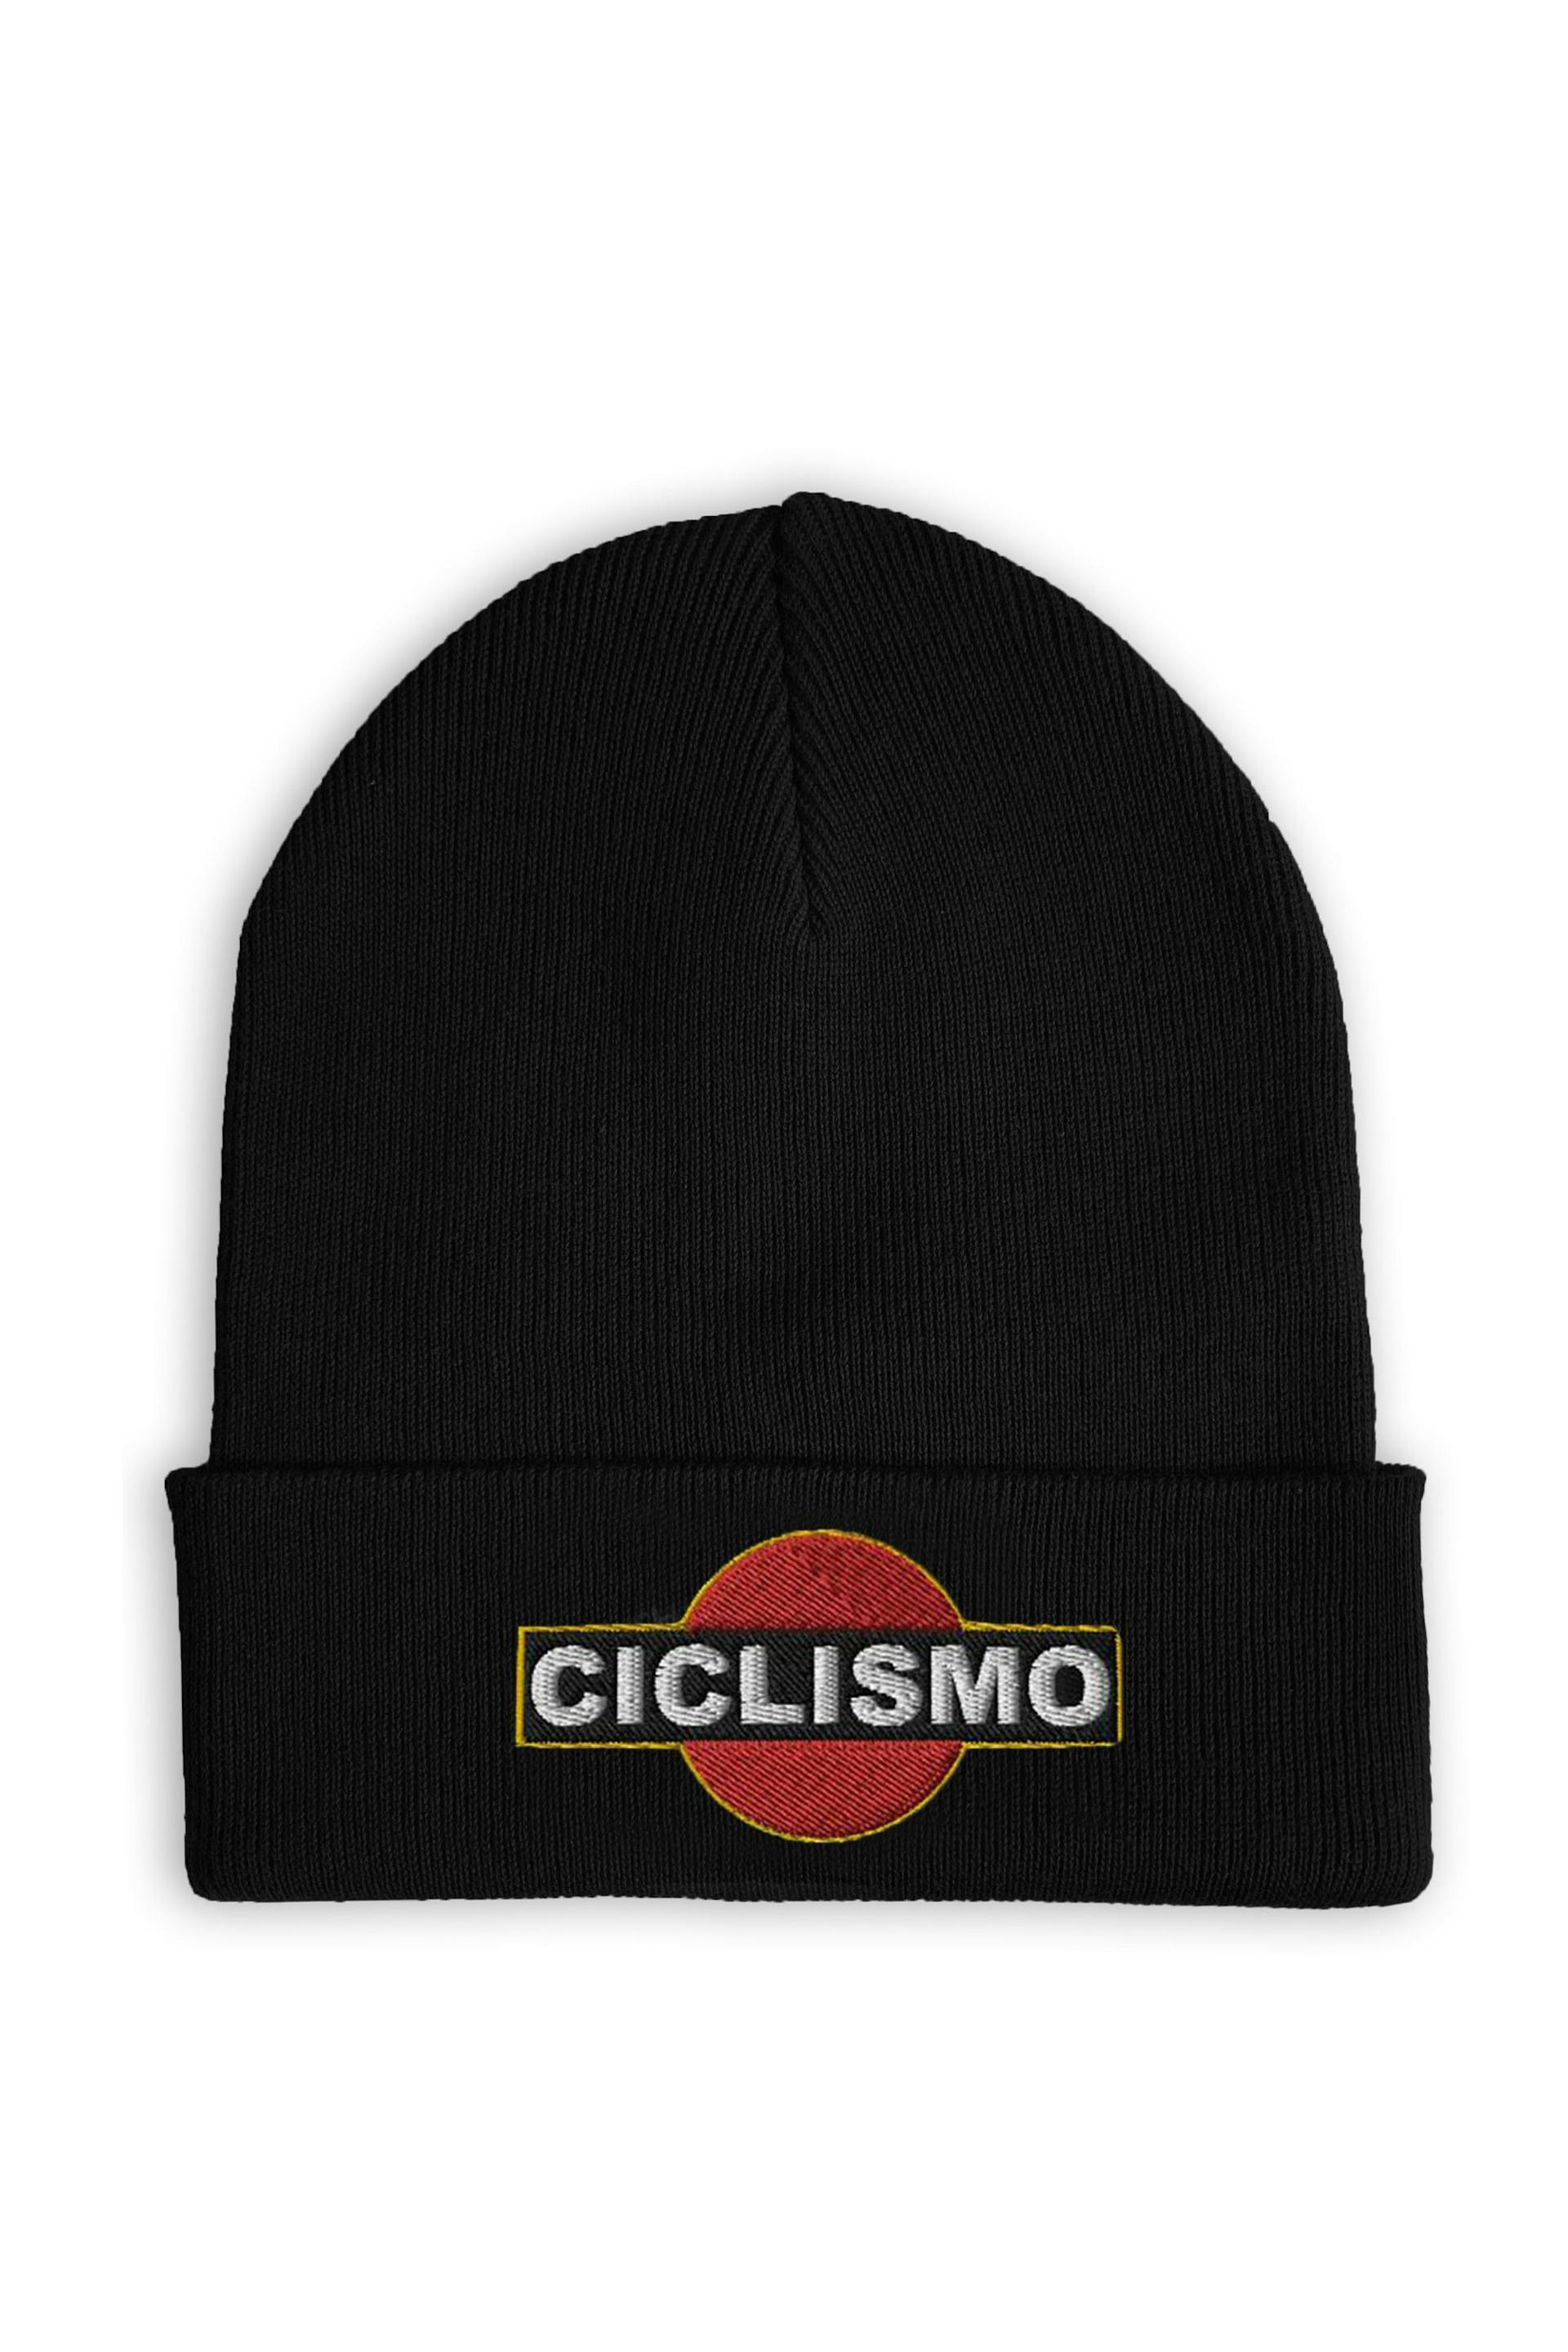 Ciclismo Beanie Hat Black